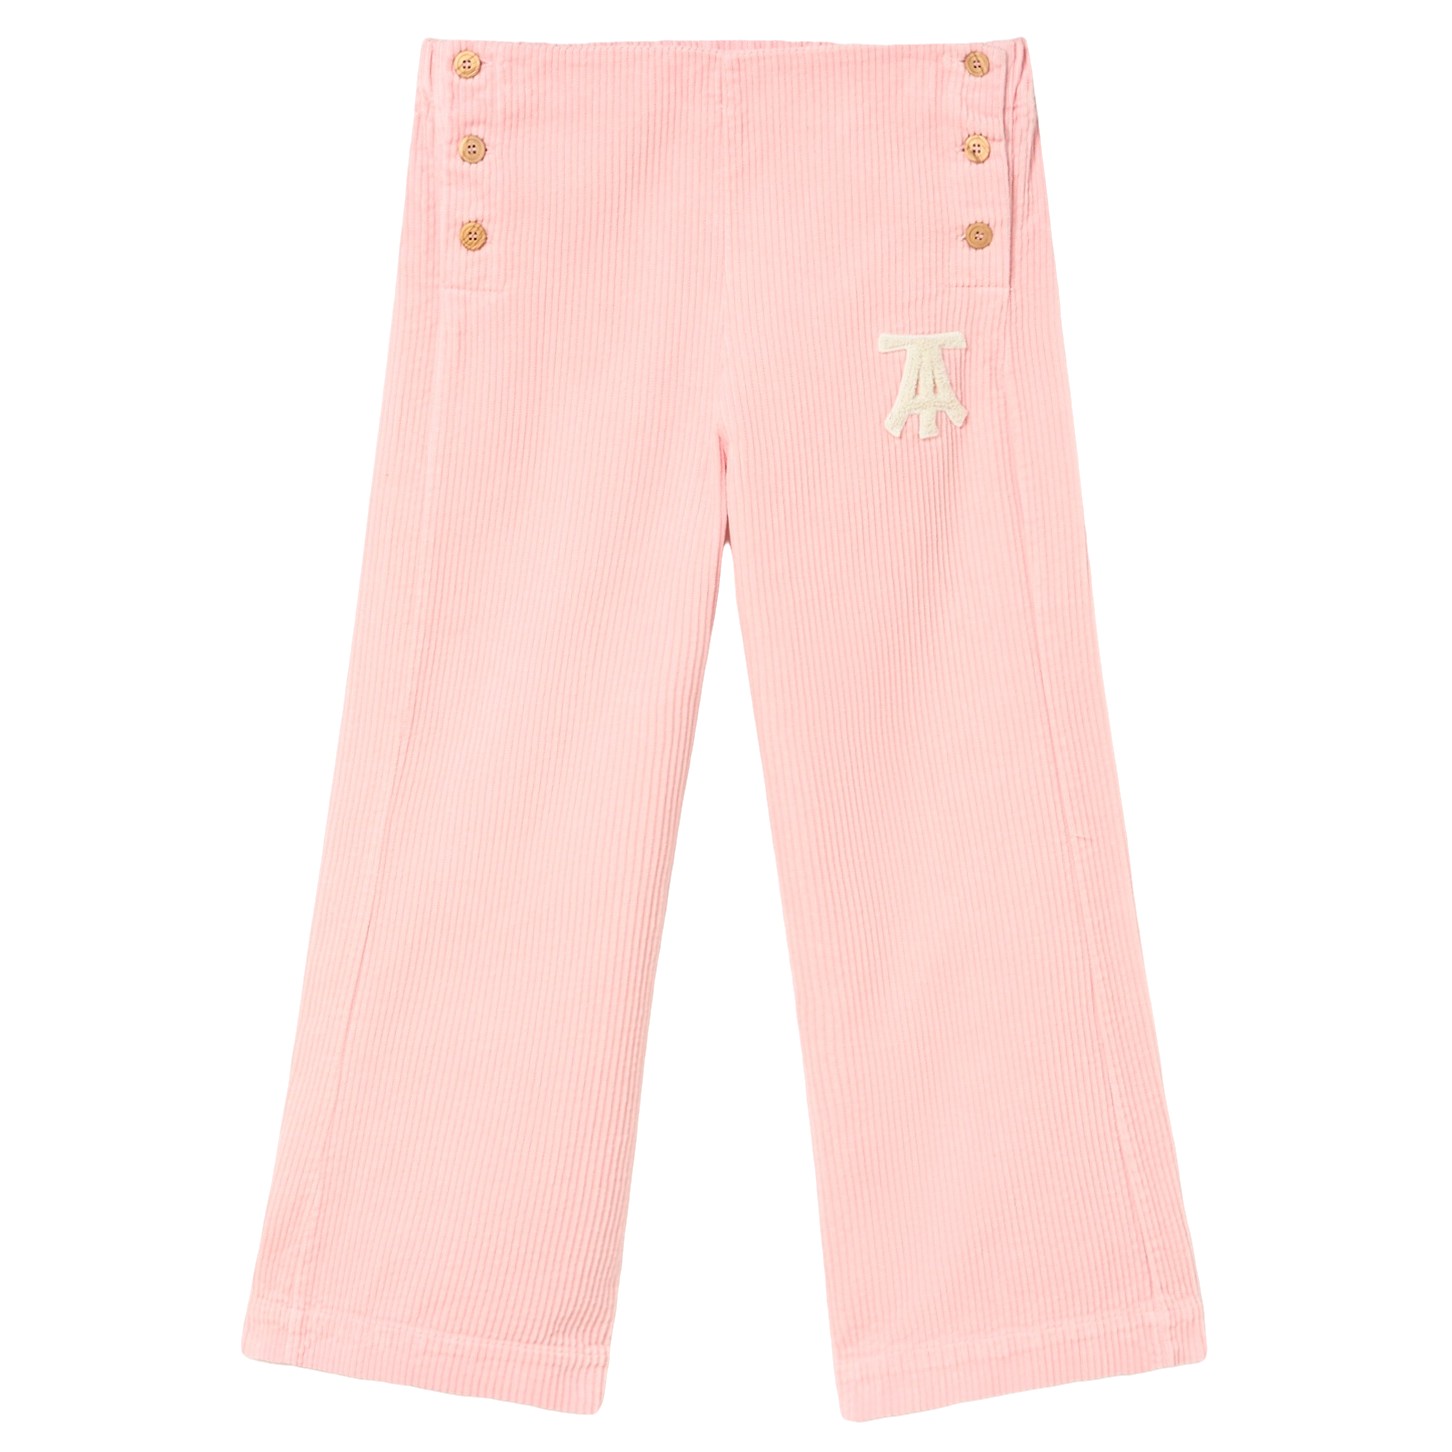 Dress Pants - The Pink Porcupine ltd.